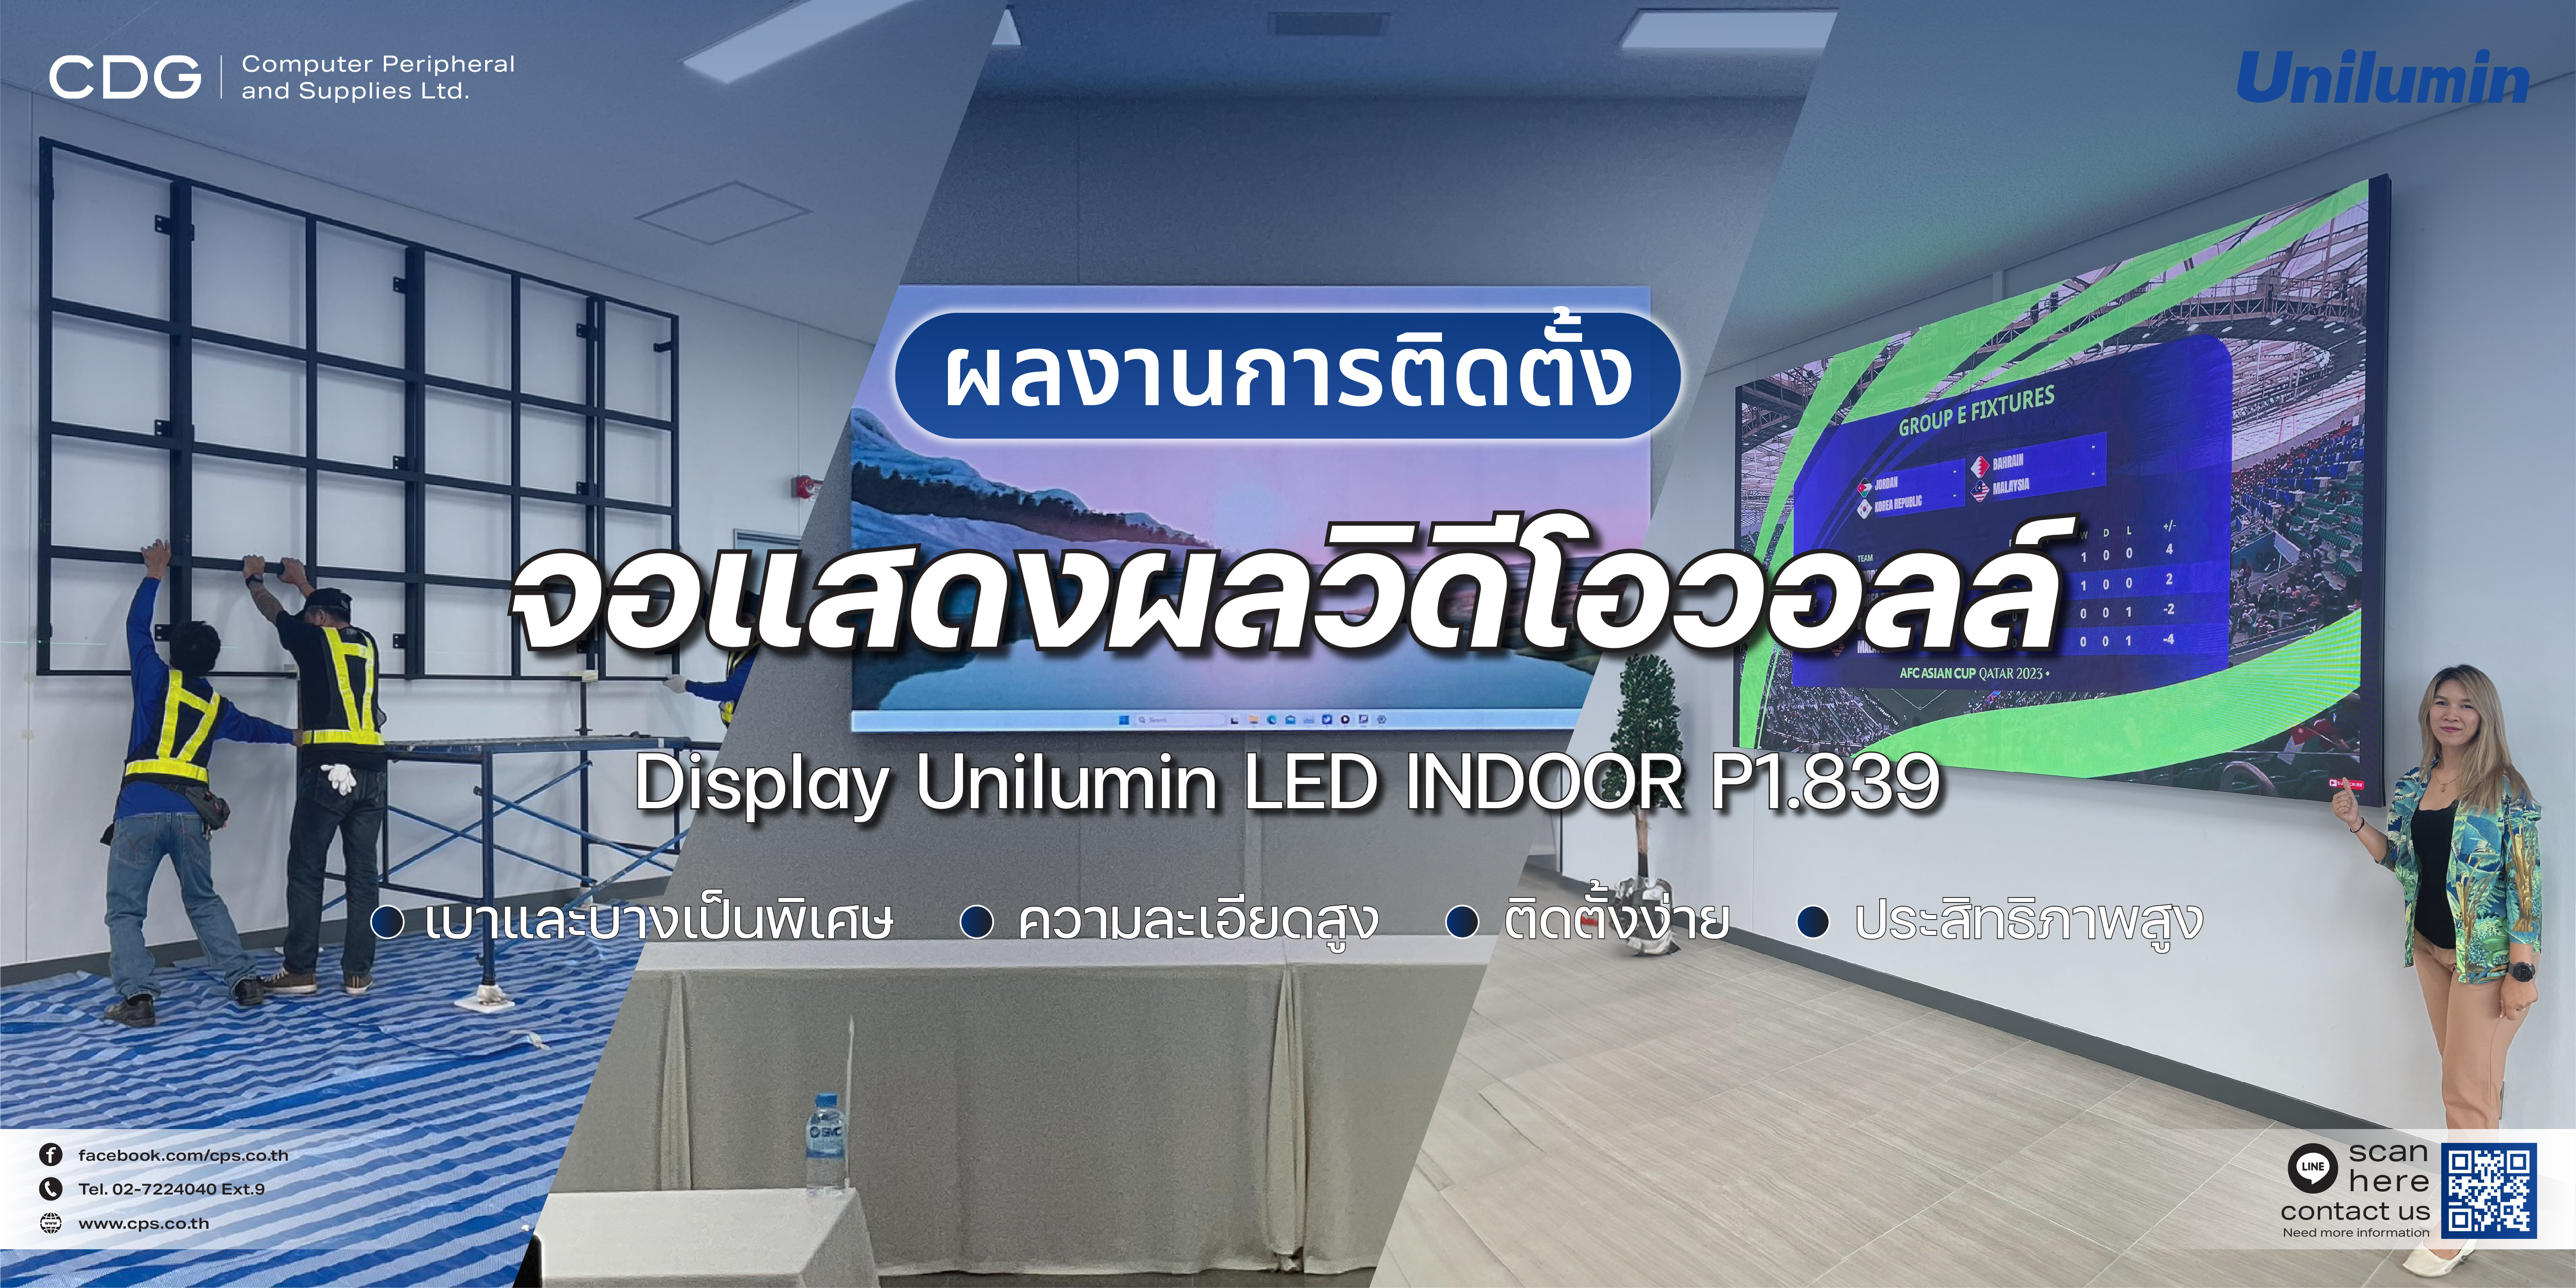 Video Wall Display Unilumin LED INDOOR P1.839